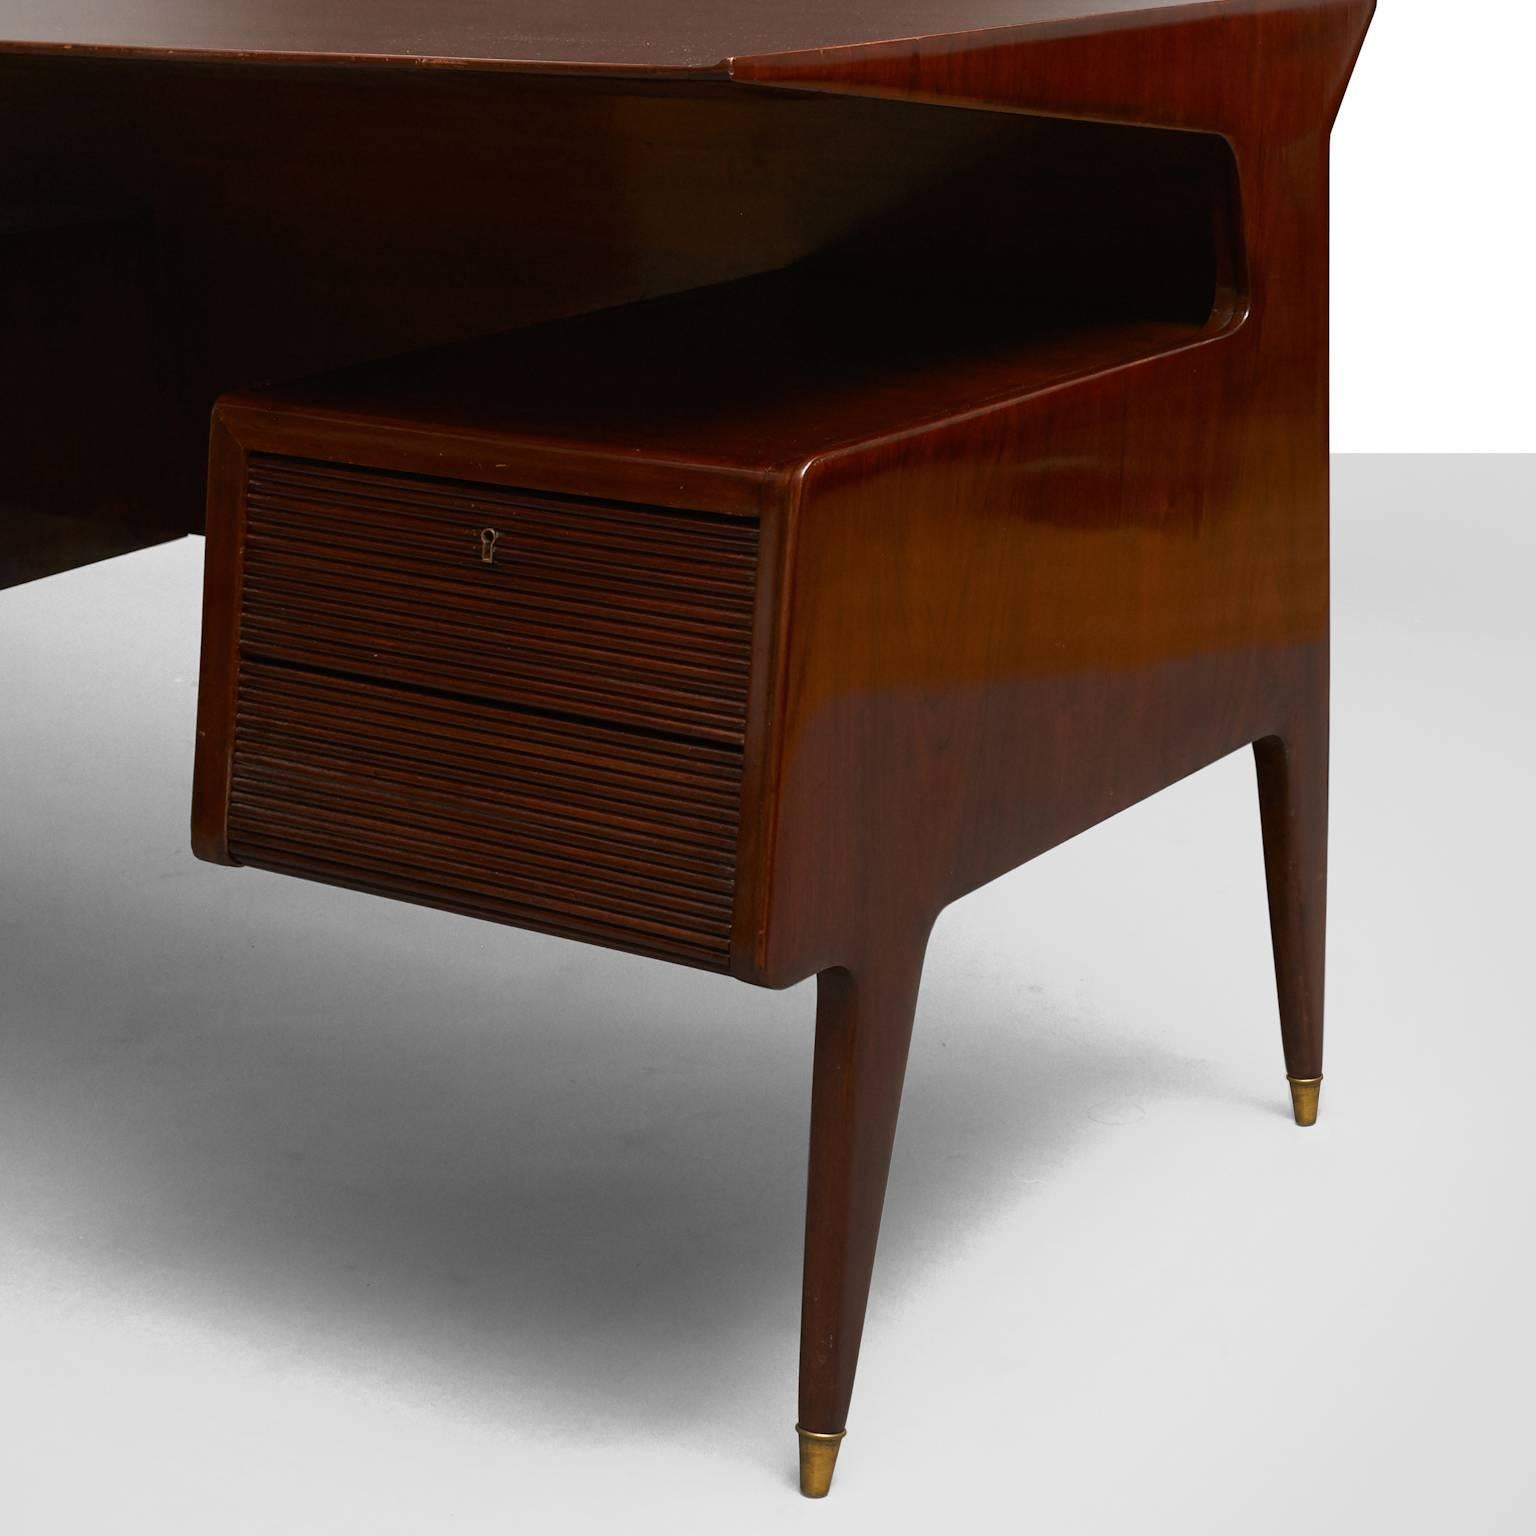 Brass Guglielmo Ulrich Style Executive Desk, Possibly Made by Dassi, circa 1954